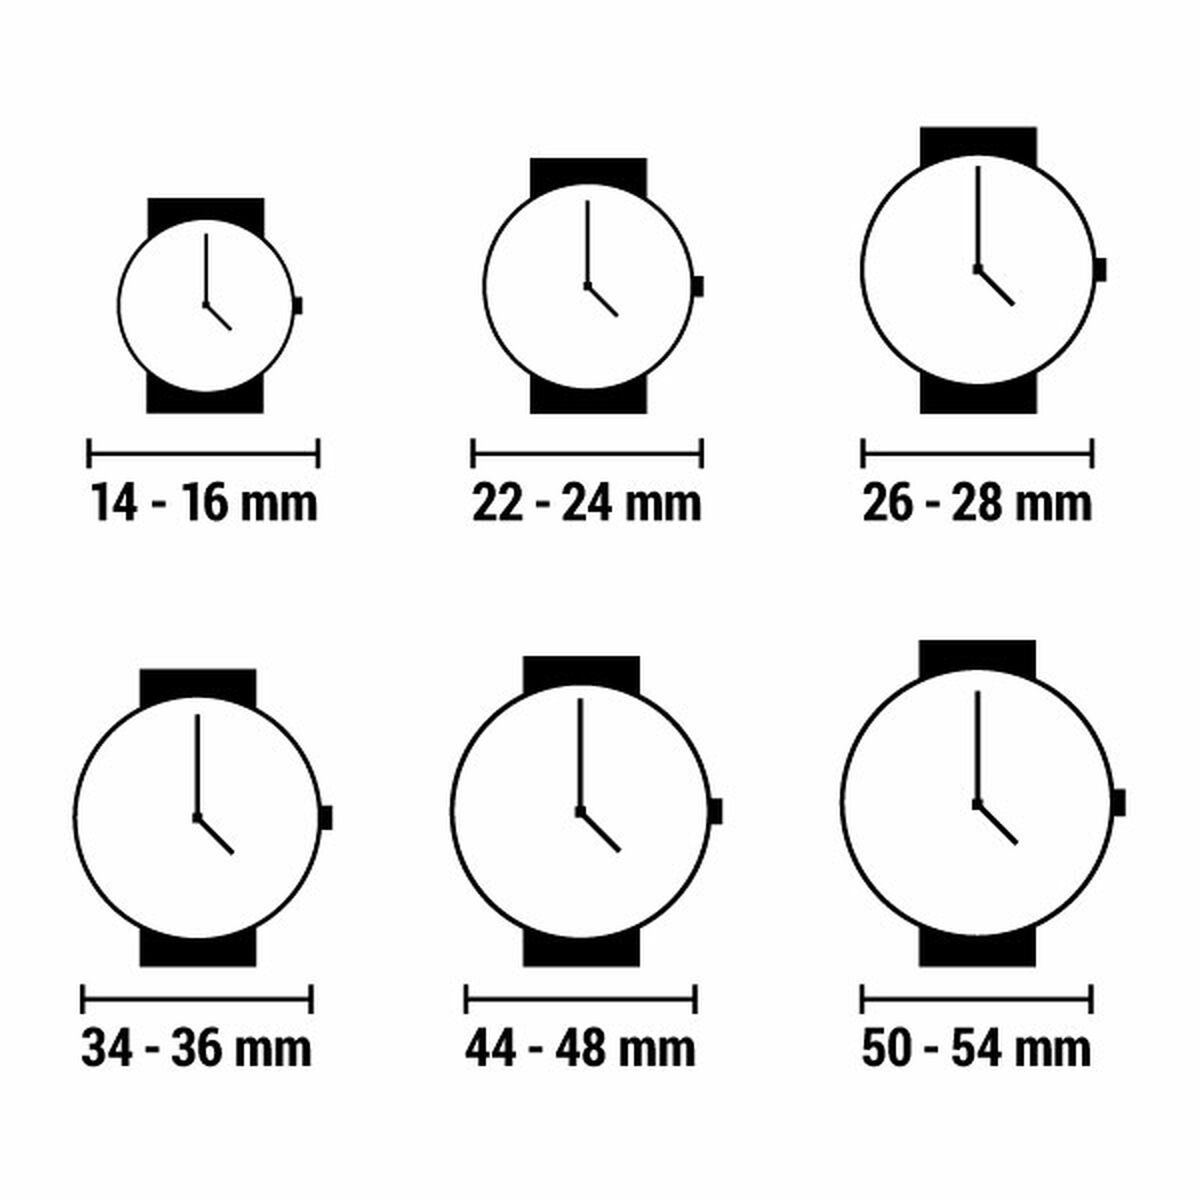 Horloge Dames CO88 Collection 8CW-10021B